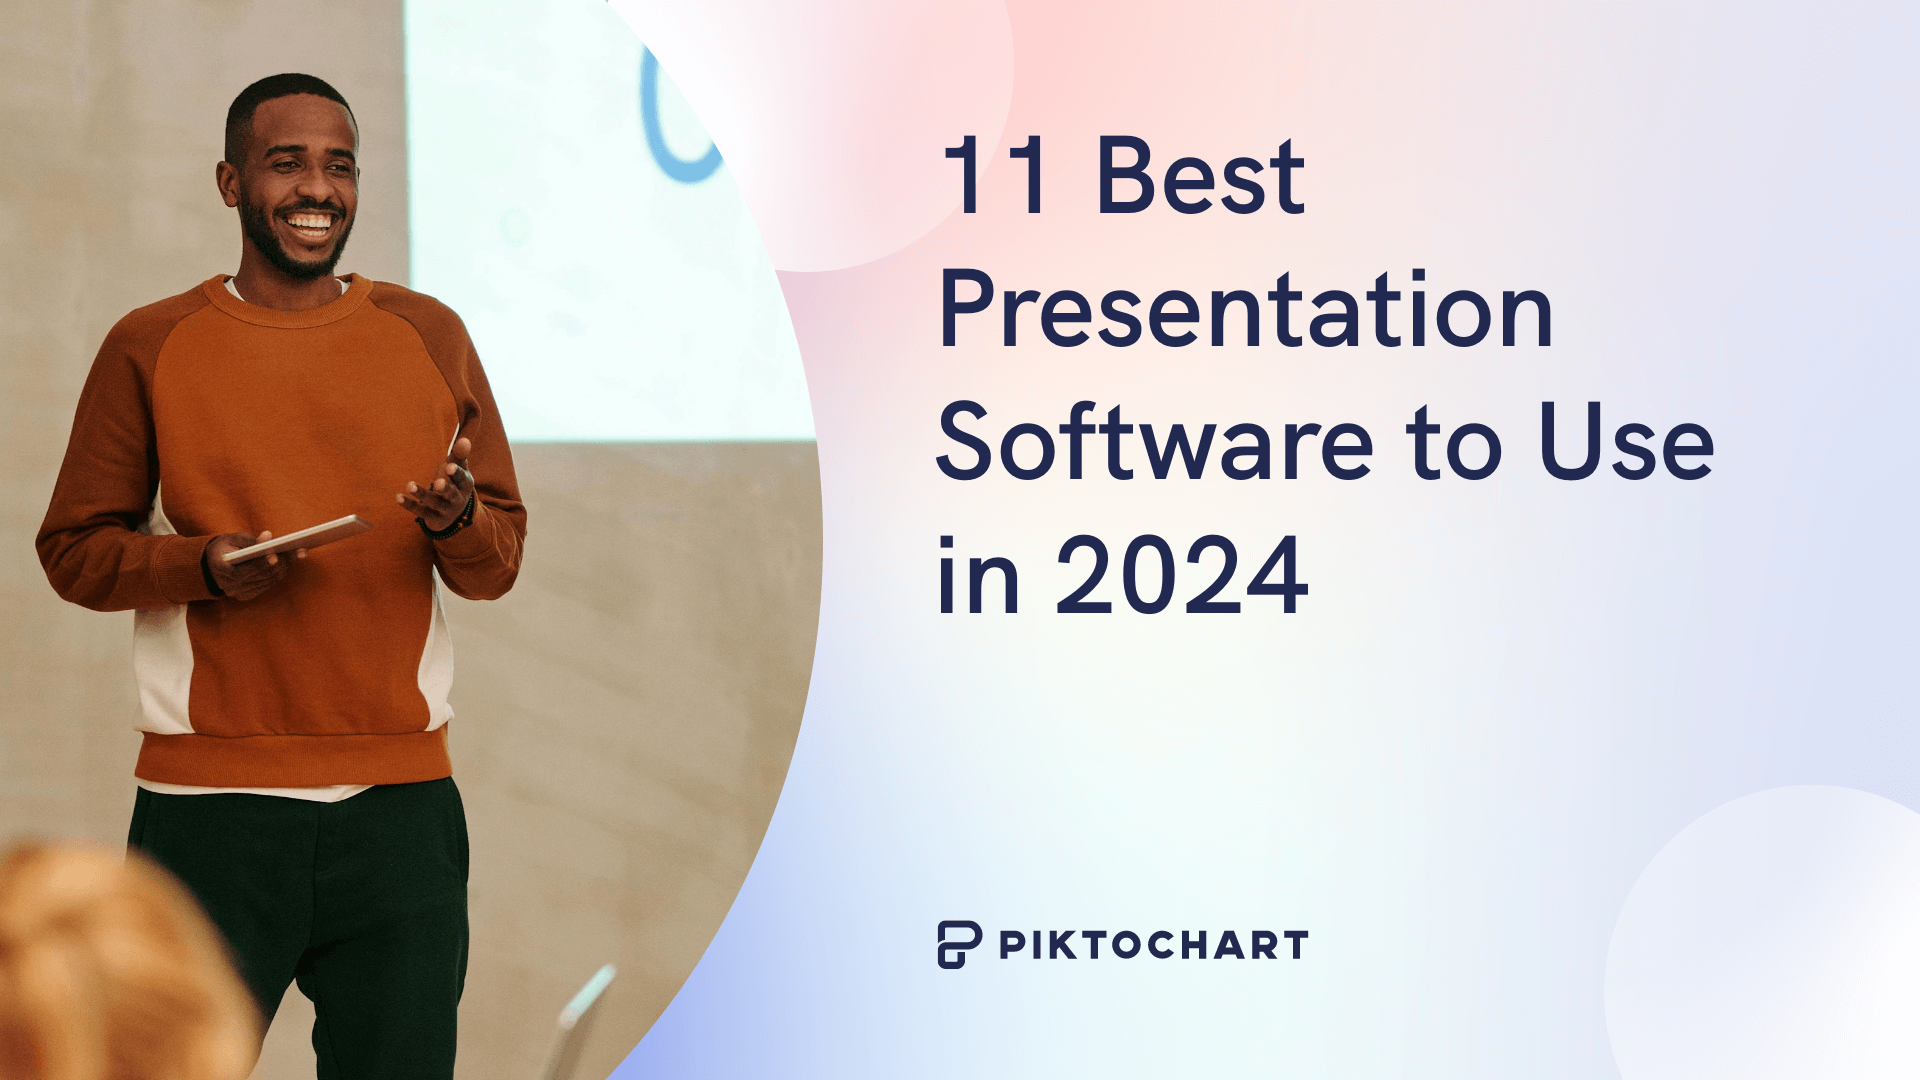 best presentation software to use in 2024, presentation software list